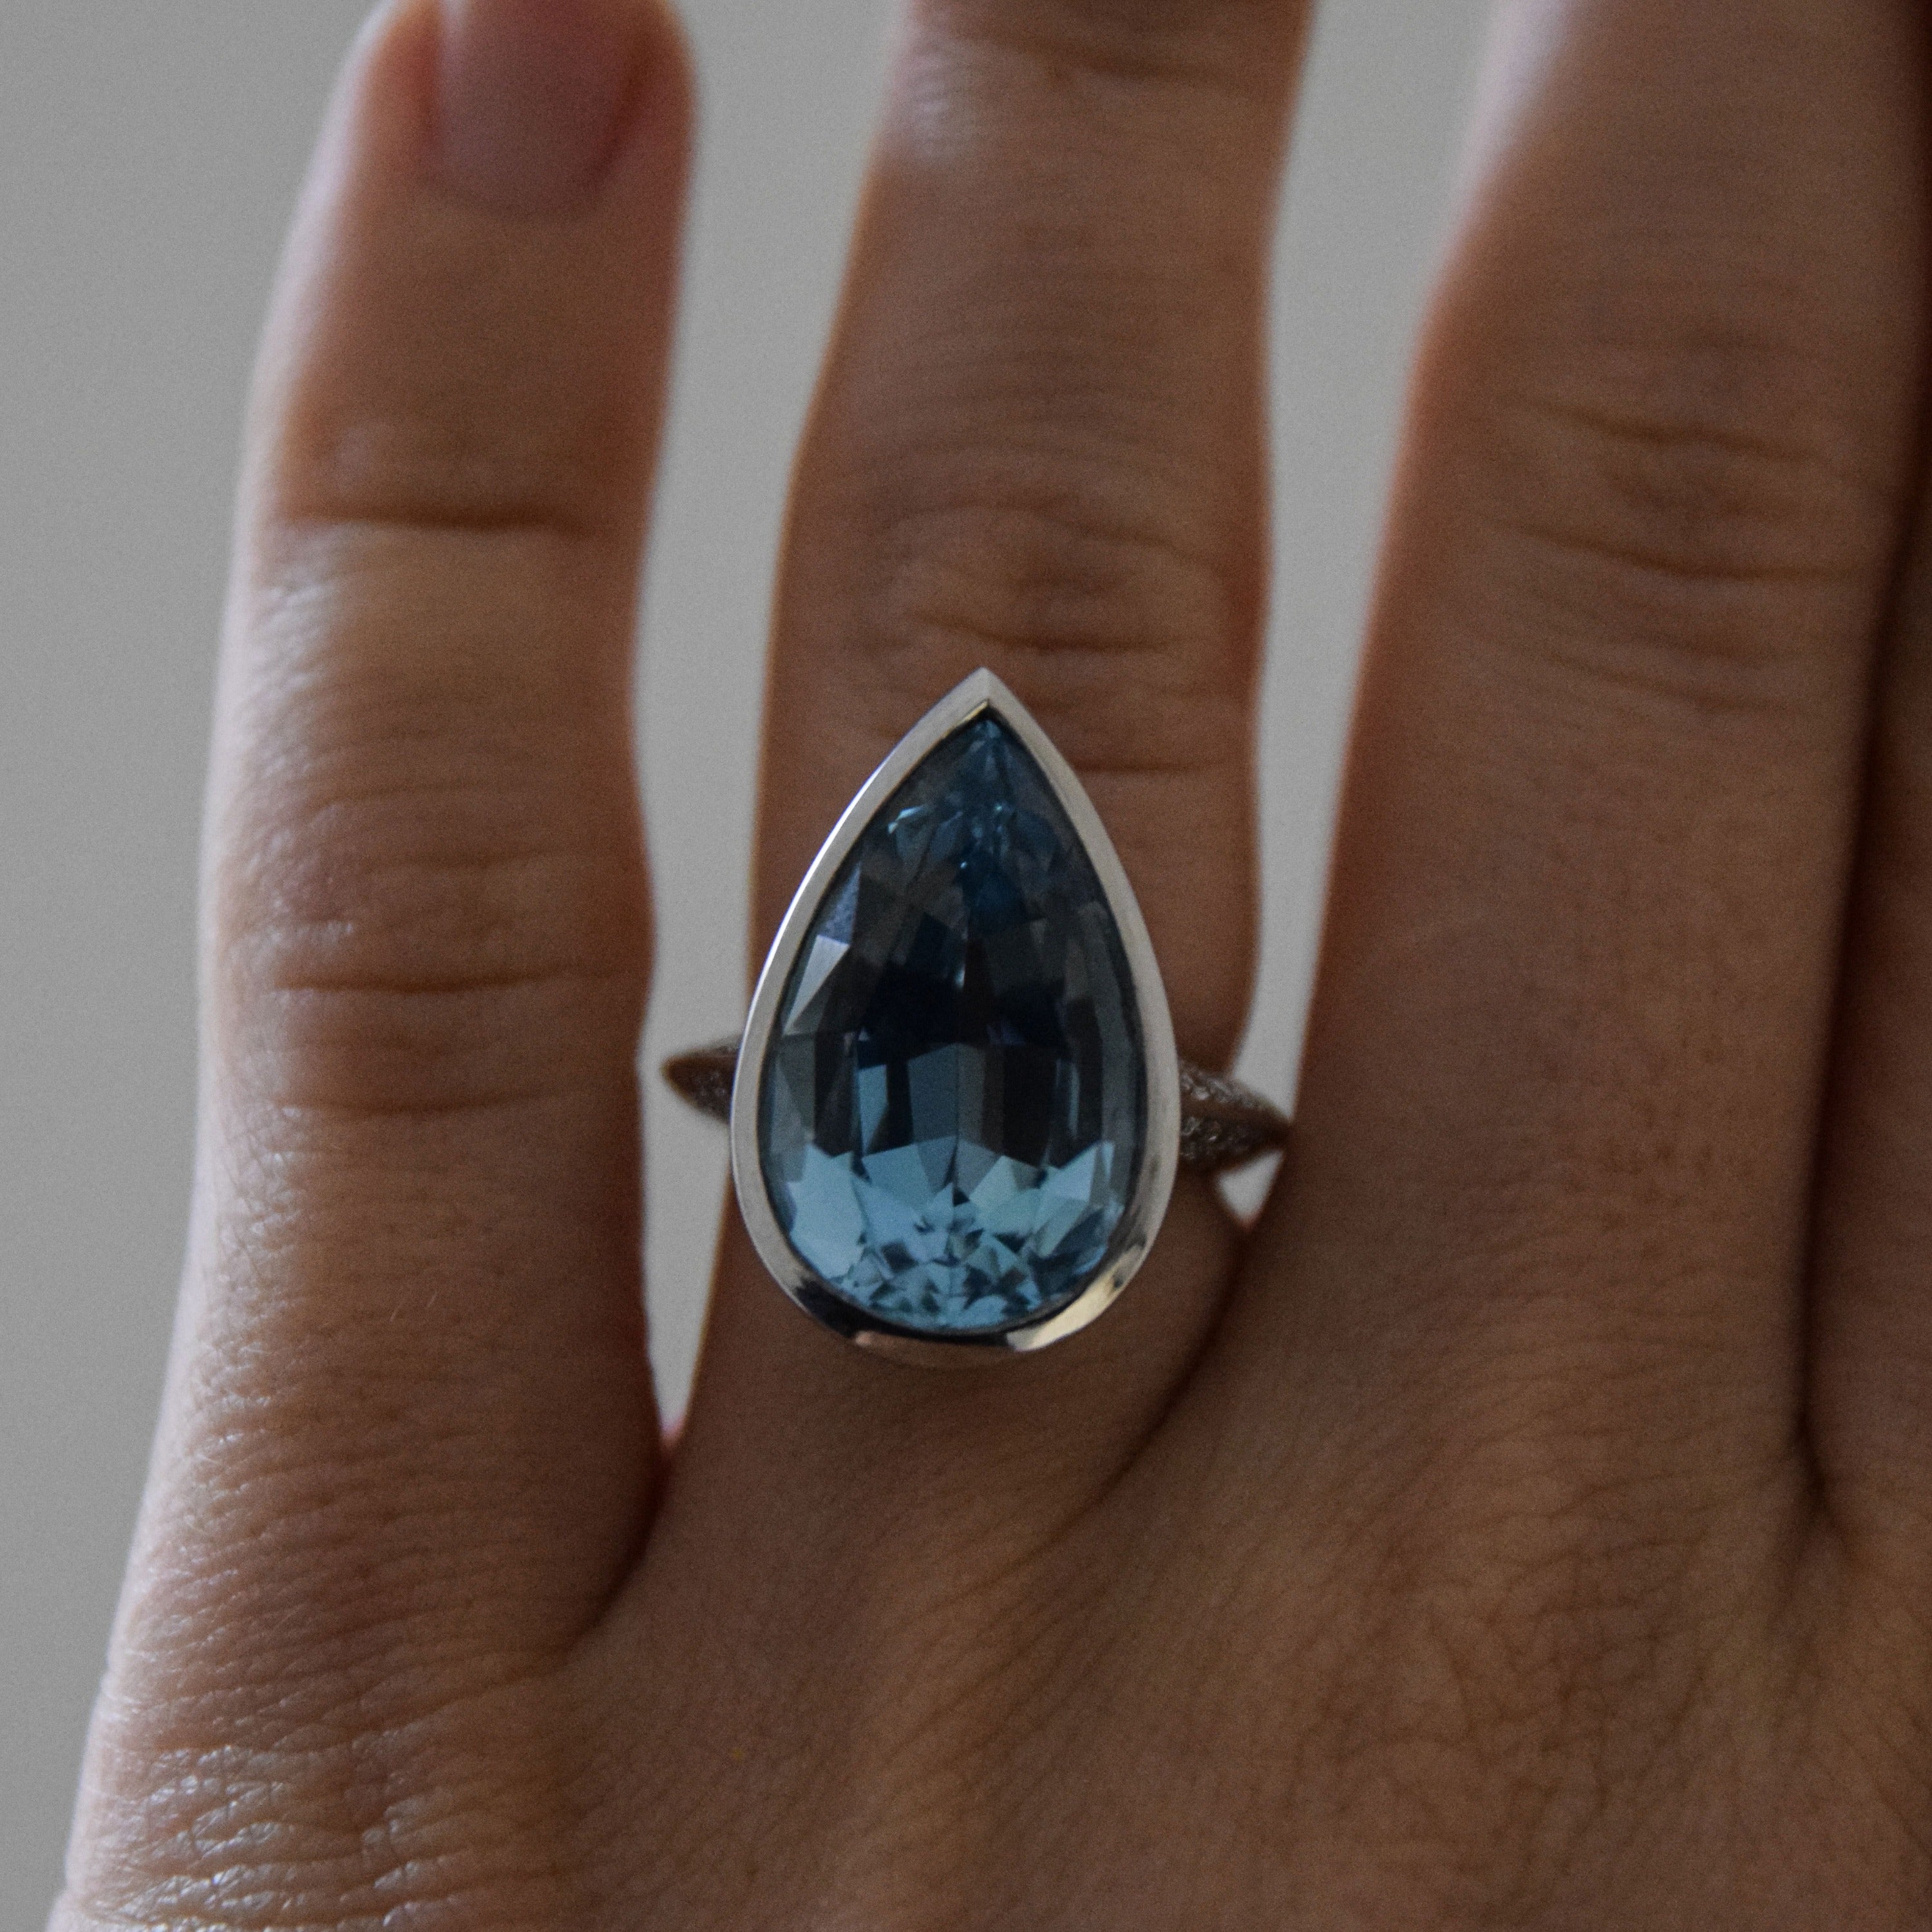 MARILYN White Gold Aquamarine & Diamond Ring